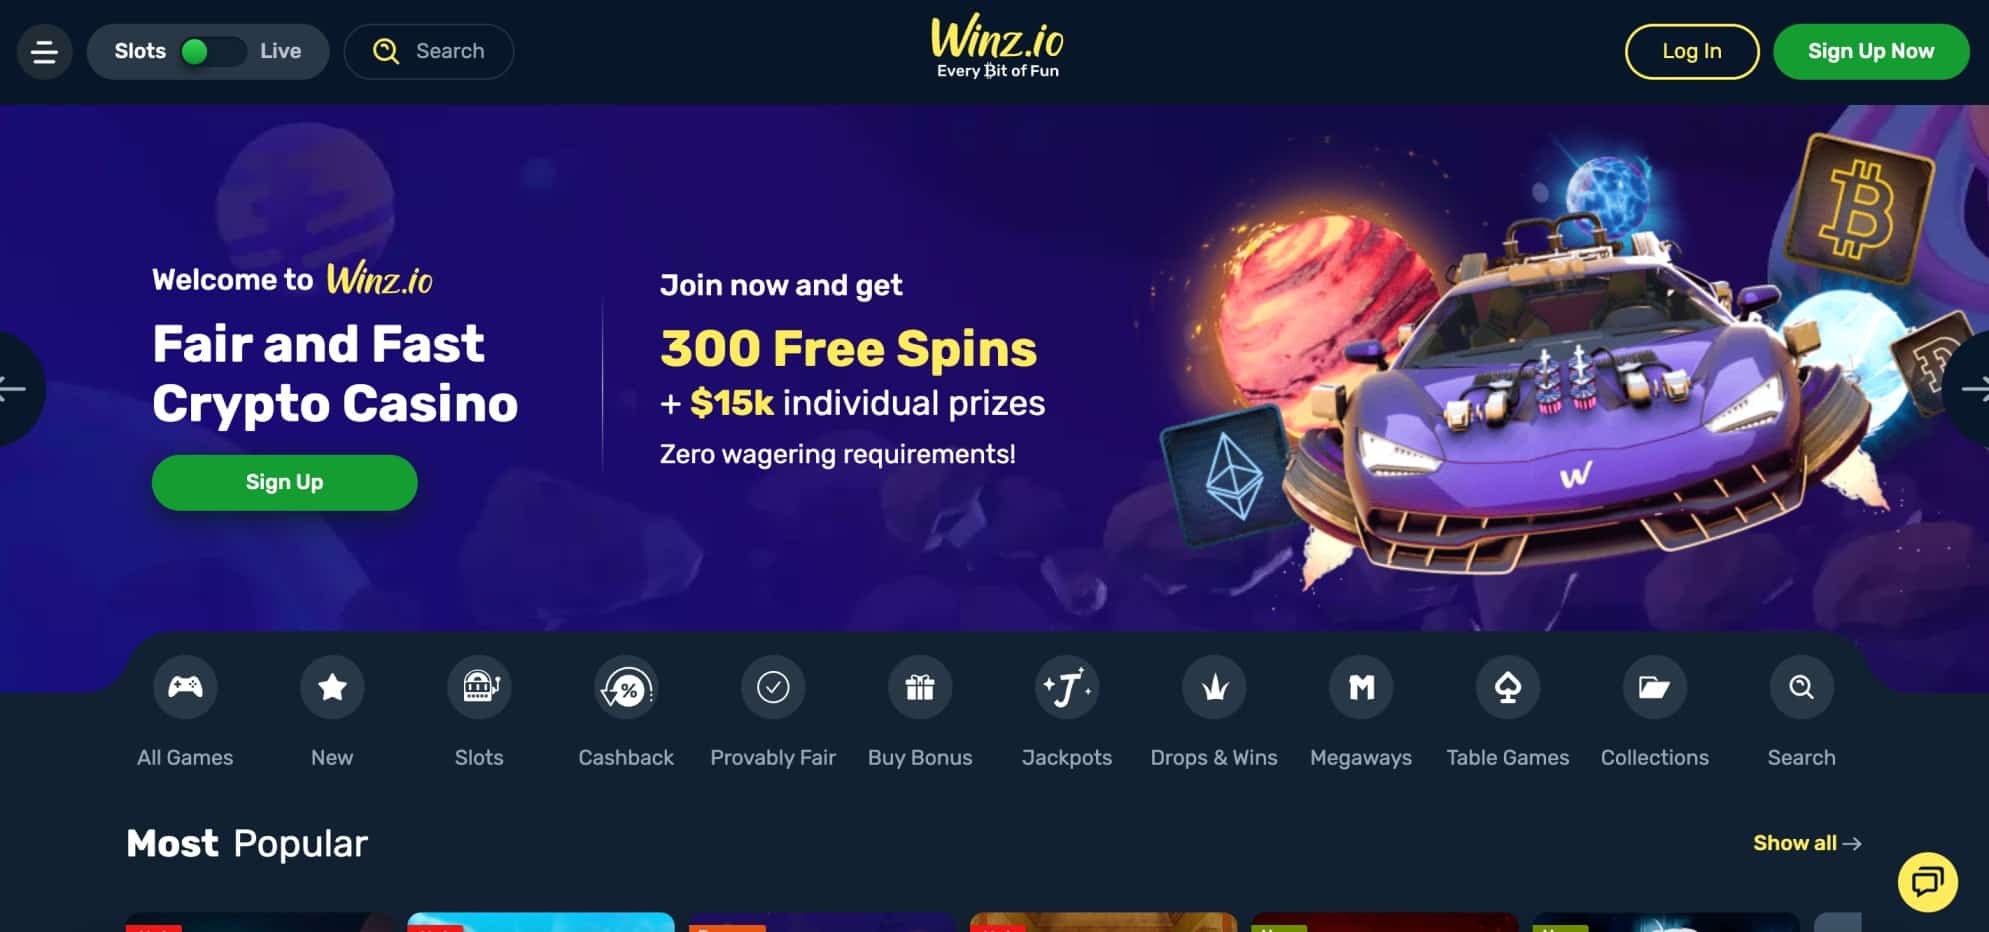 Winz.io review - Best Crypto Casinos in Thailand